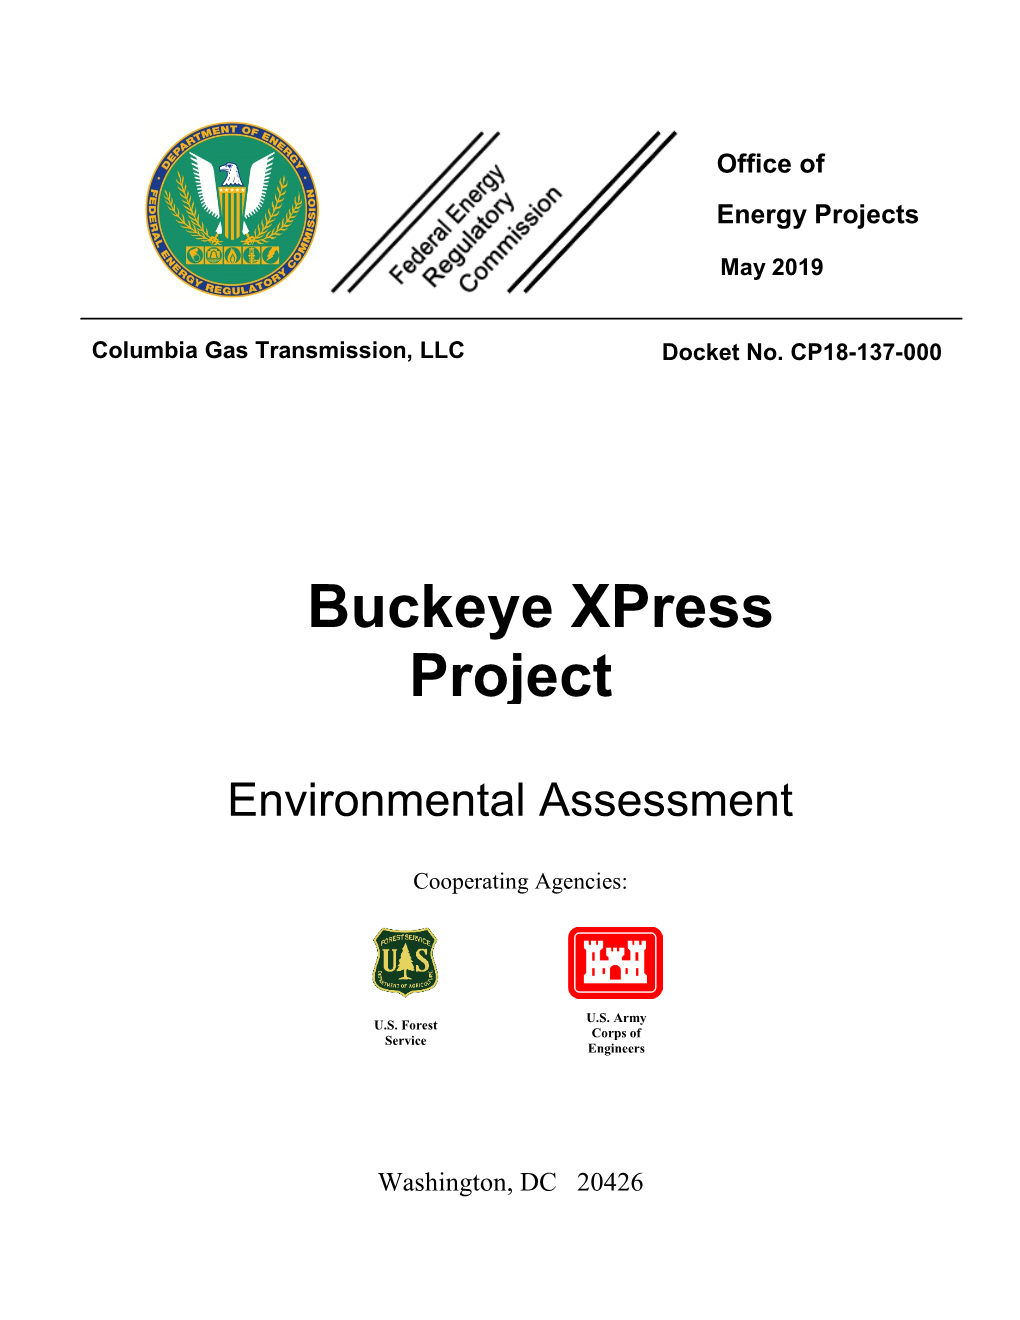 Buckeye Xpress Project Docket No